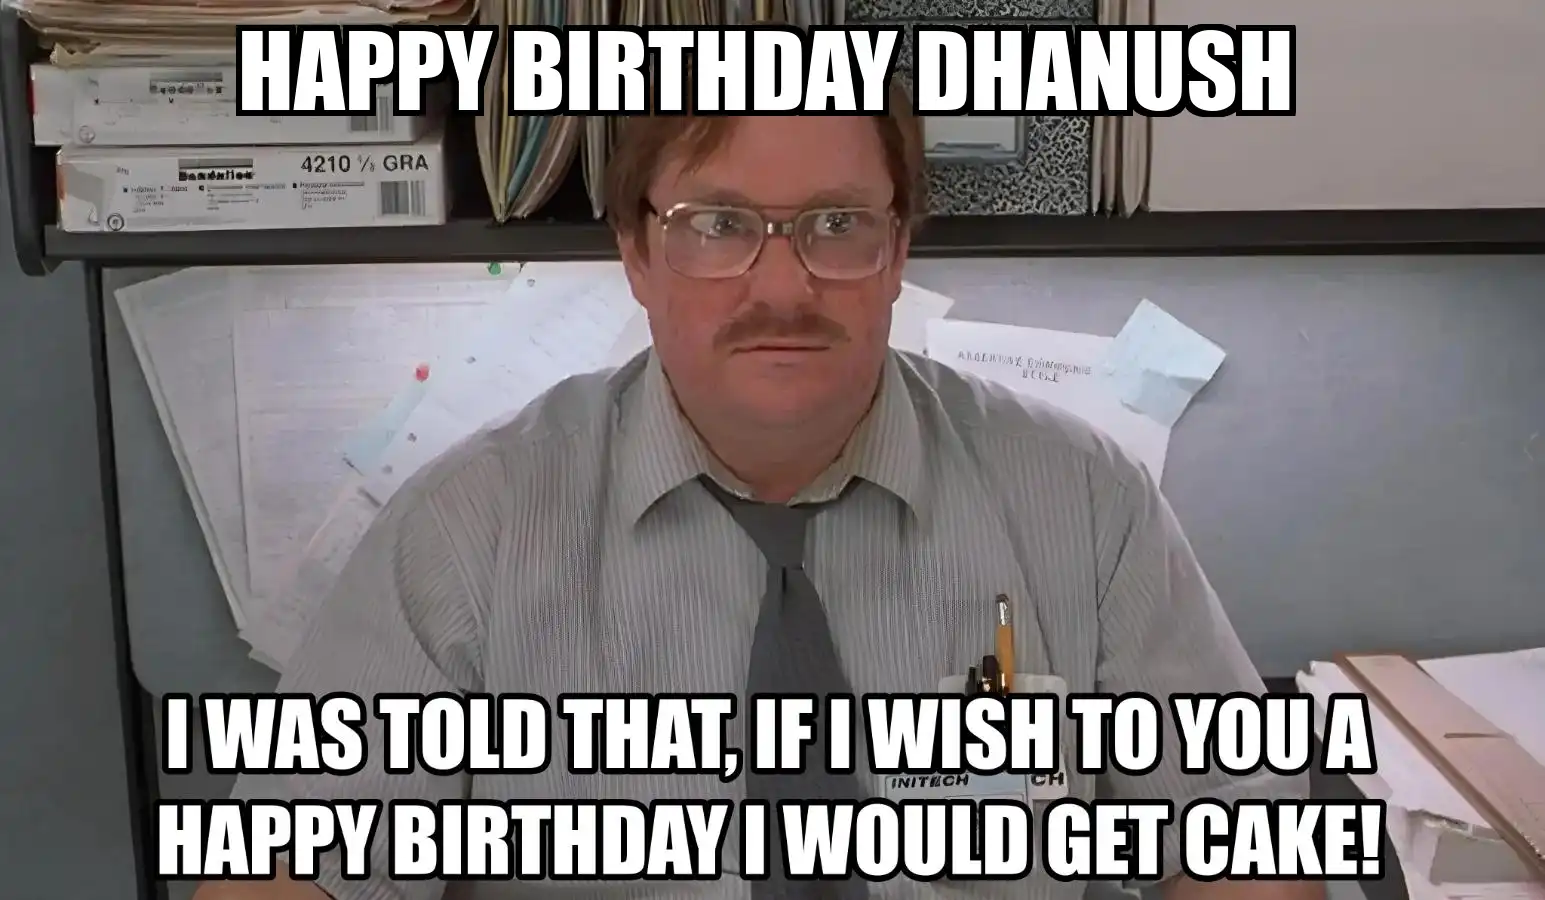 Happy Birthday Dhanush I Would Get A Cake Meme